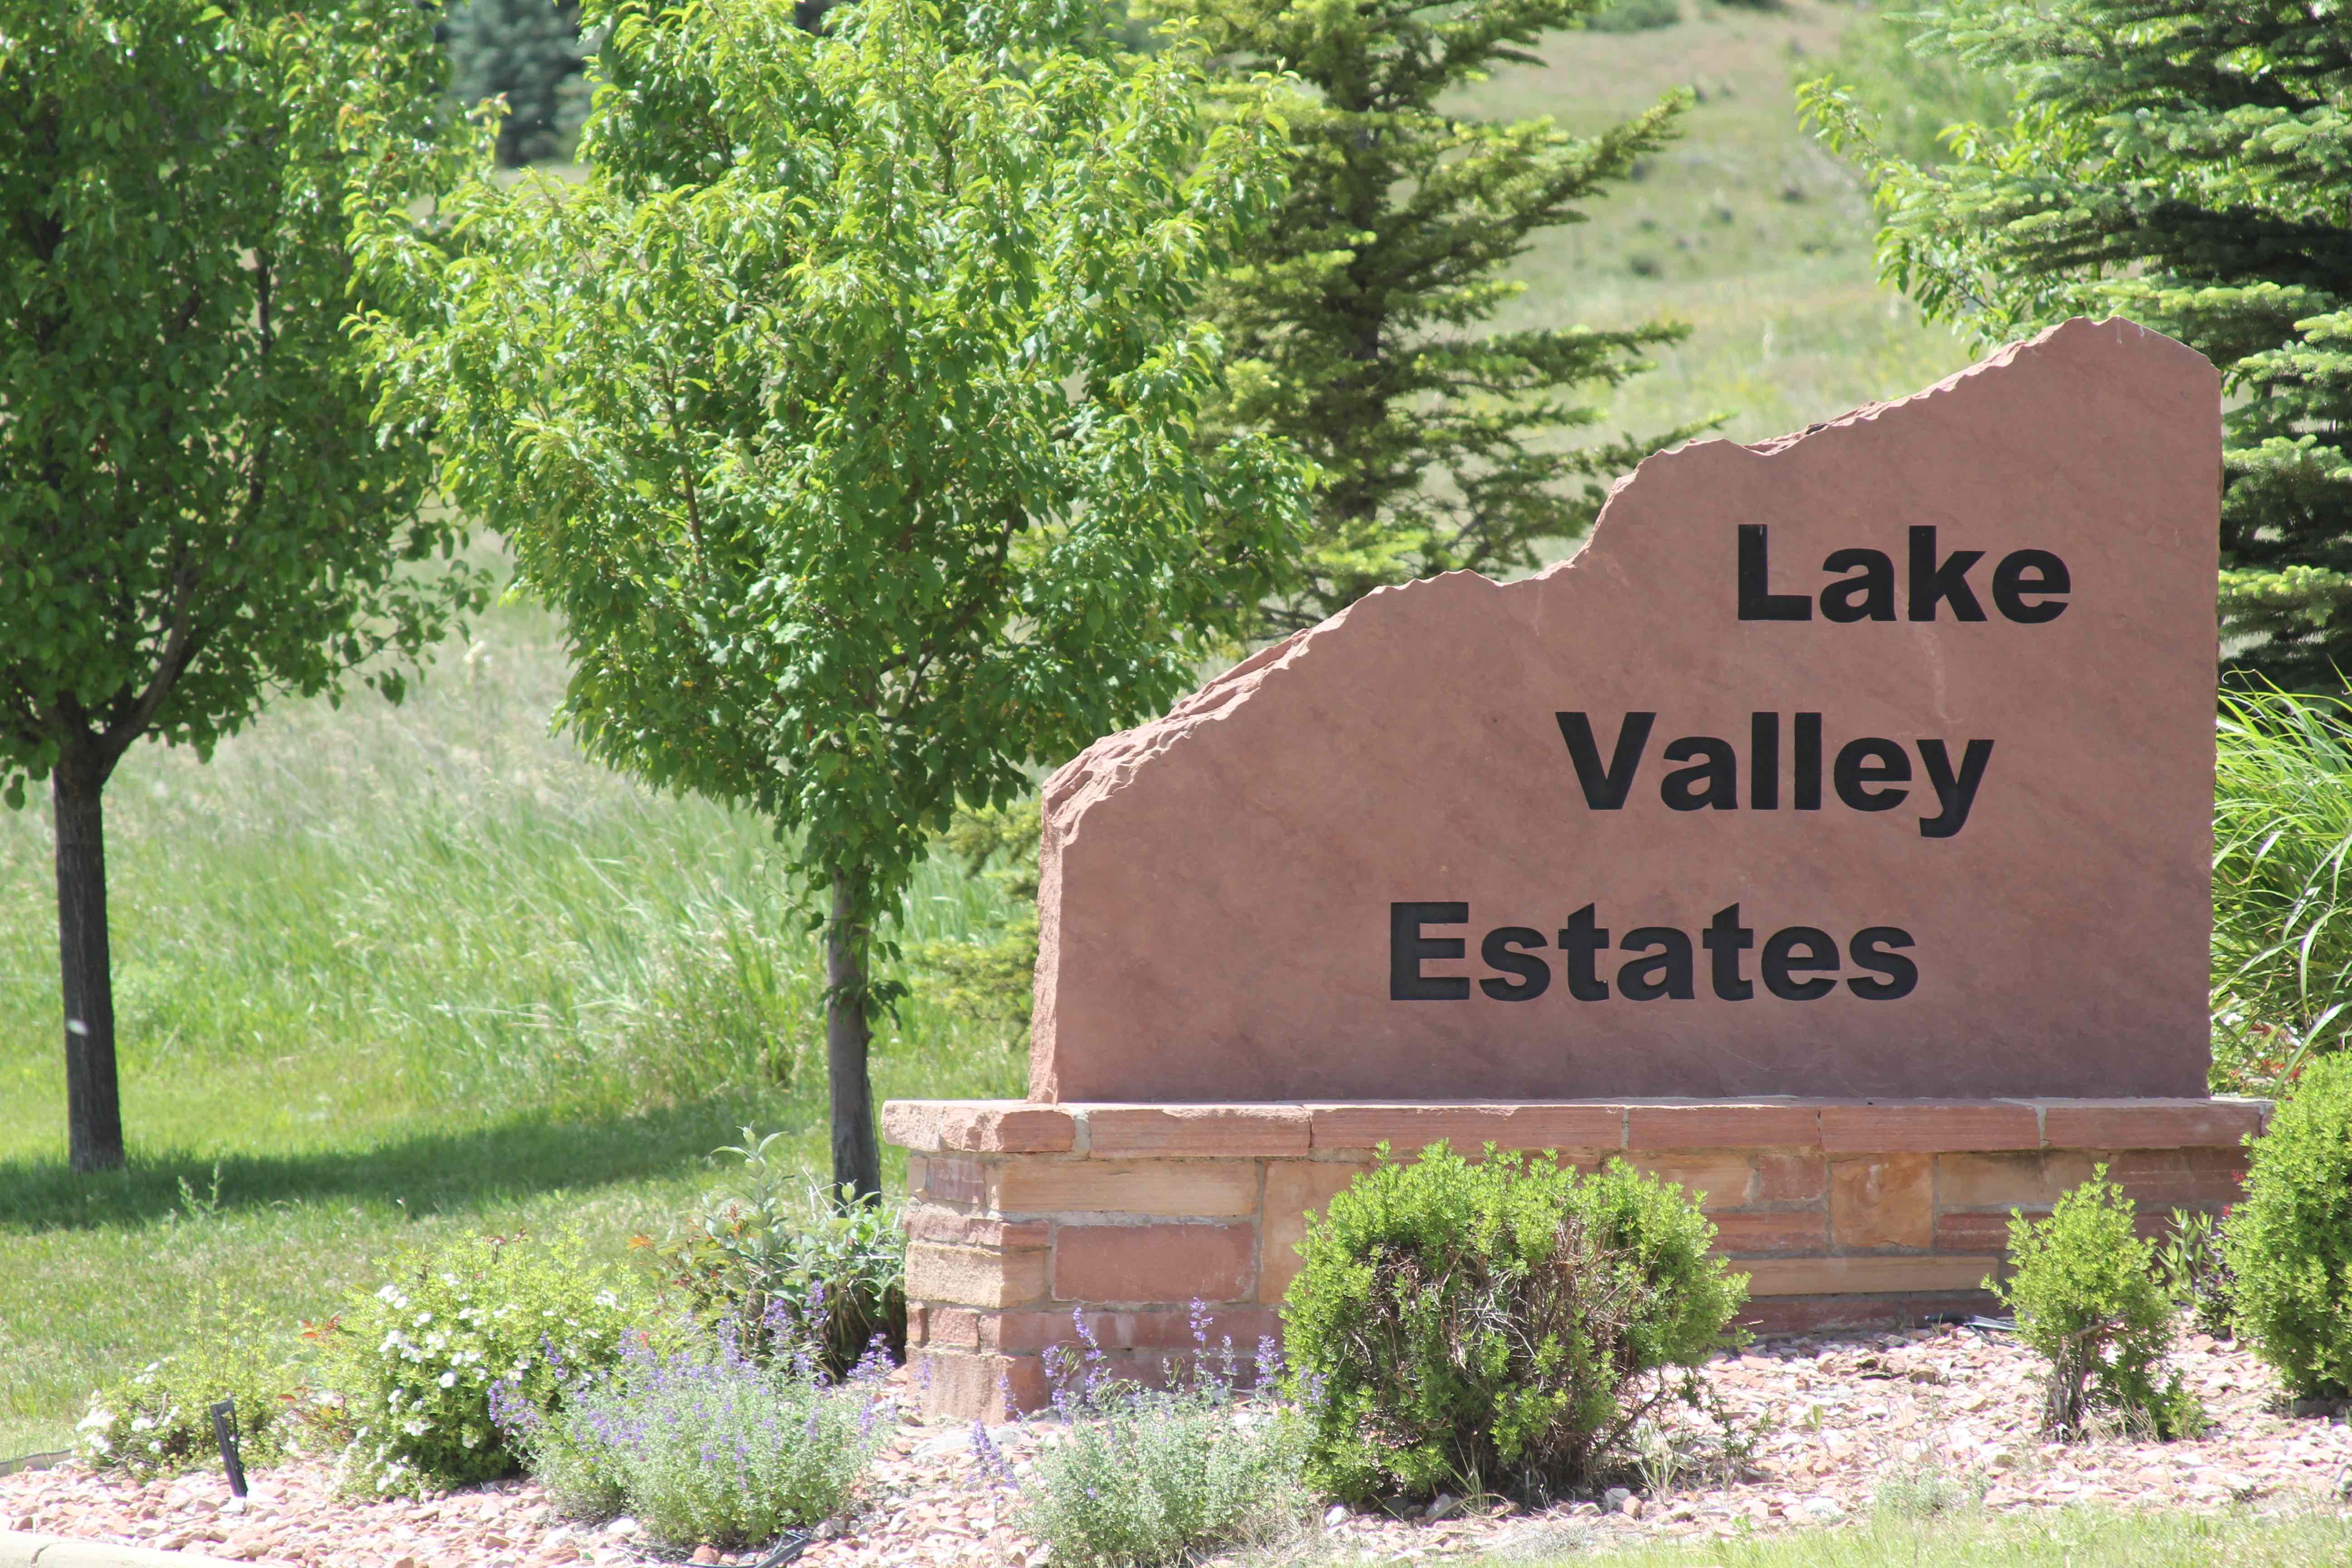 Lake Valley Estates Entrance